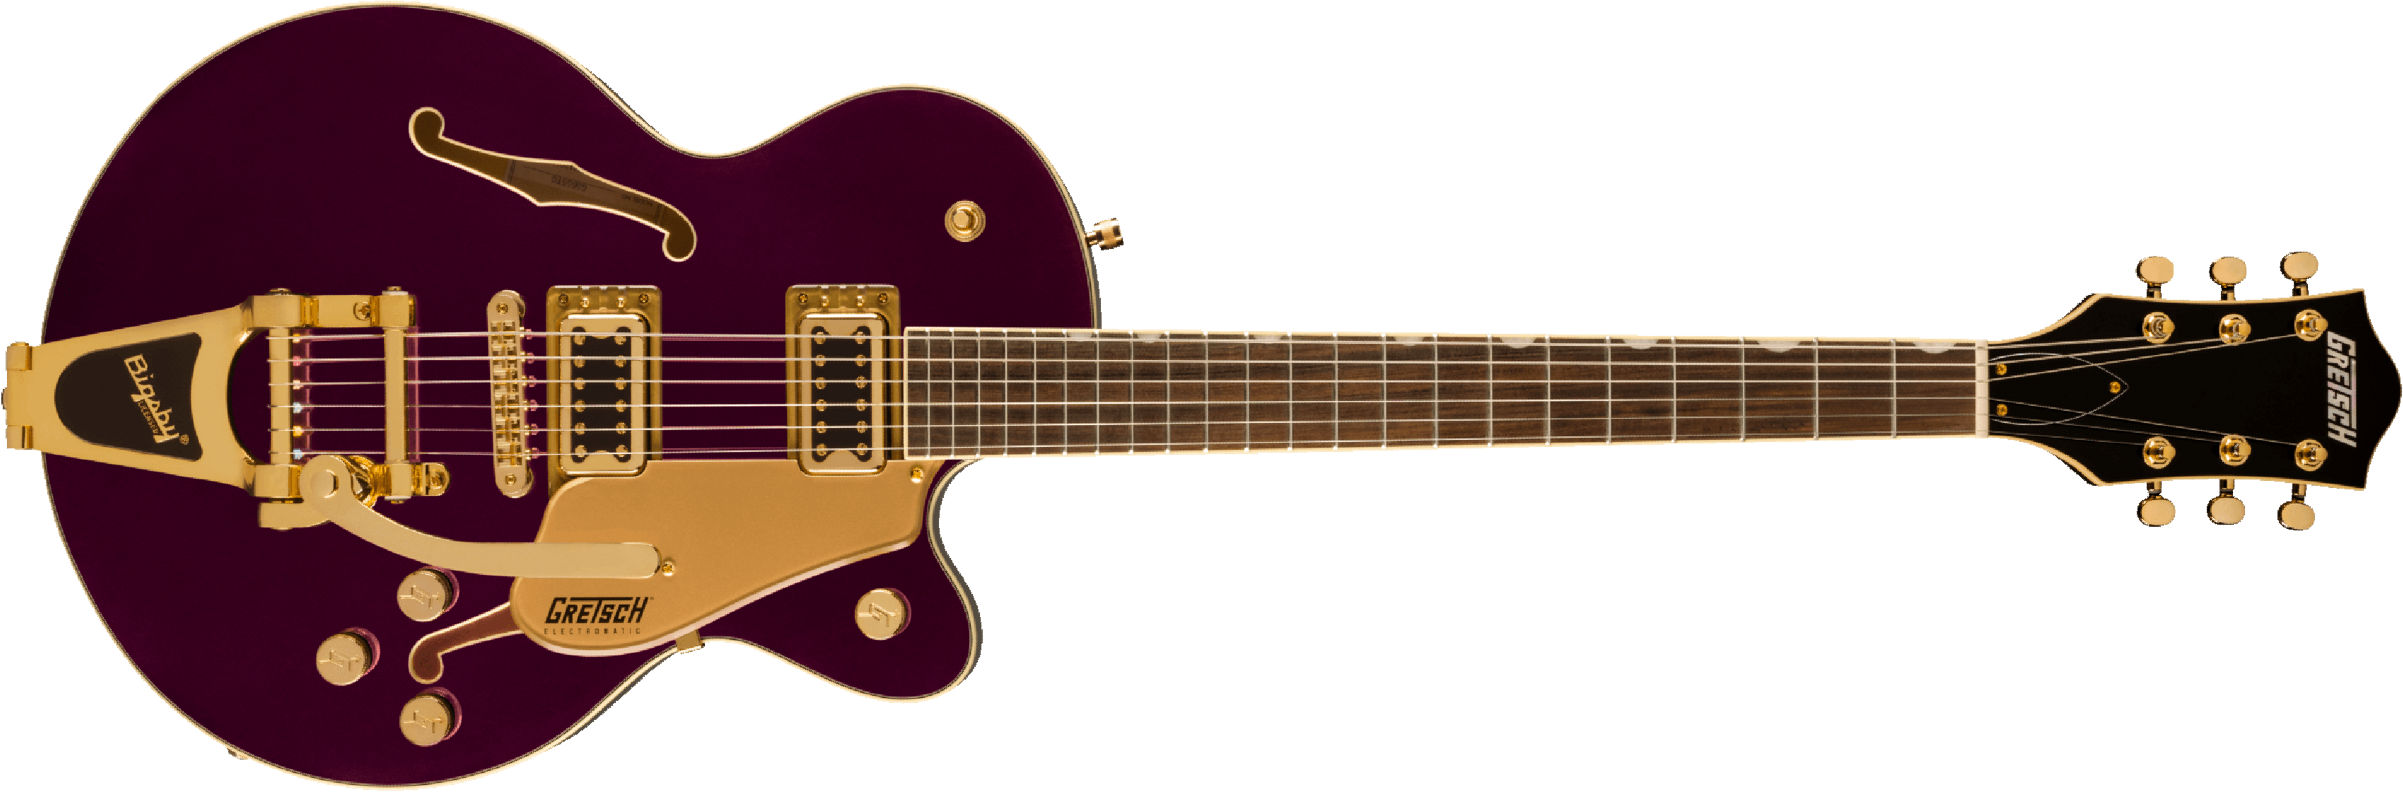 Gretsch G5655tg Electromatic Center Block Jr. Hh Bigsby Lau - Amethyst - Semi-hollow electric guitar - Main picture